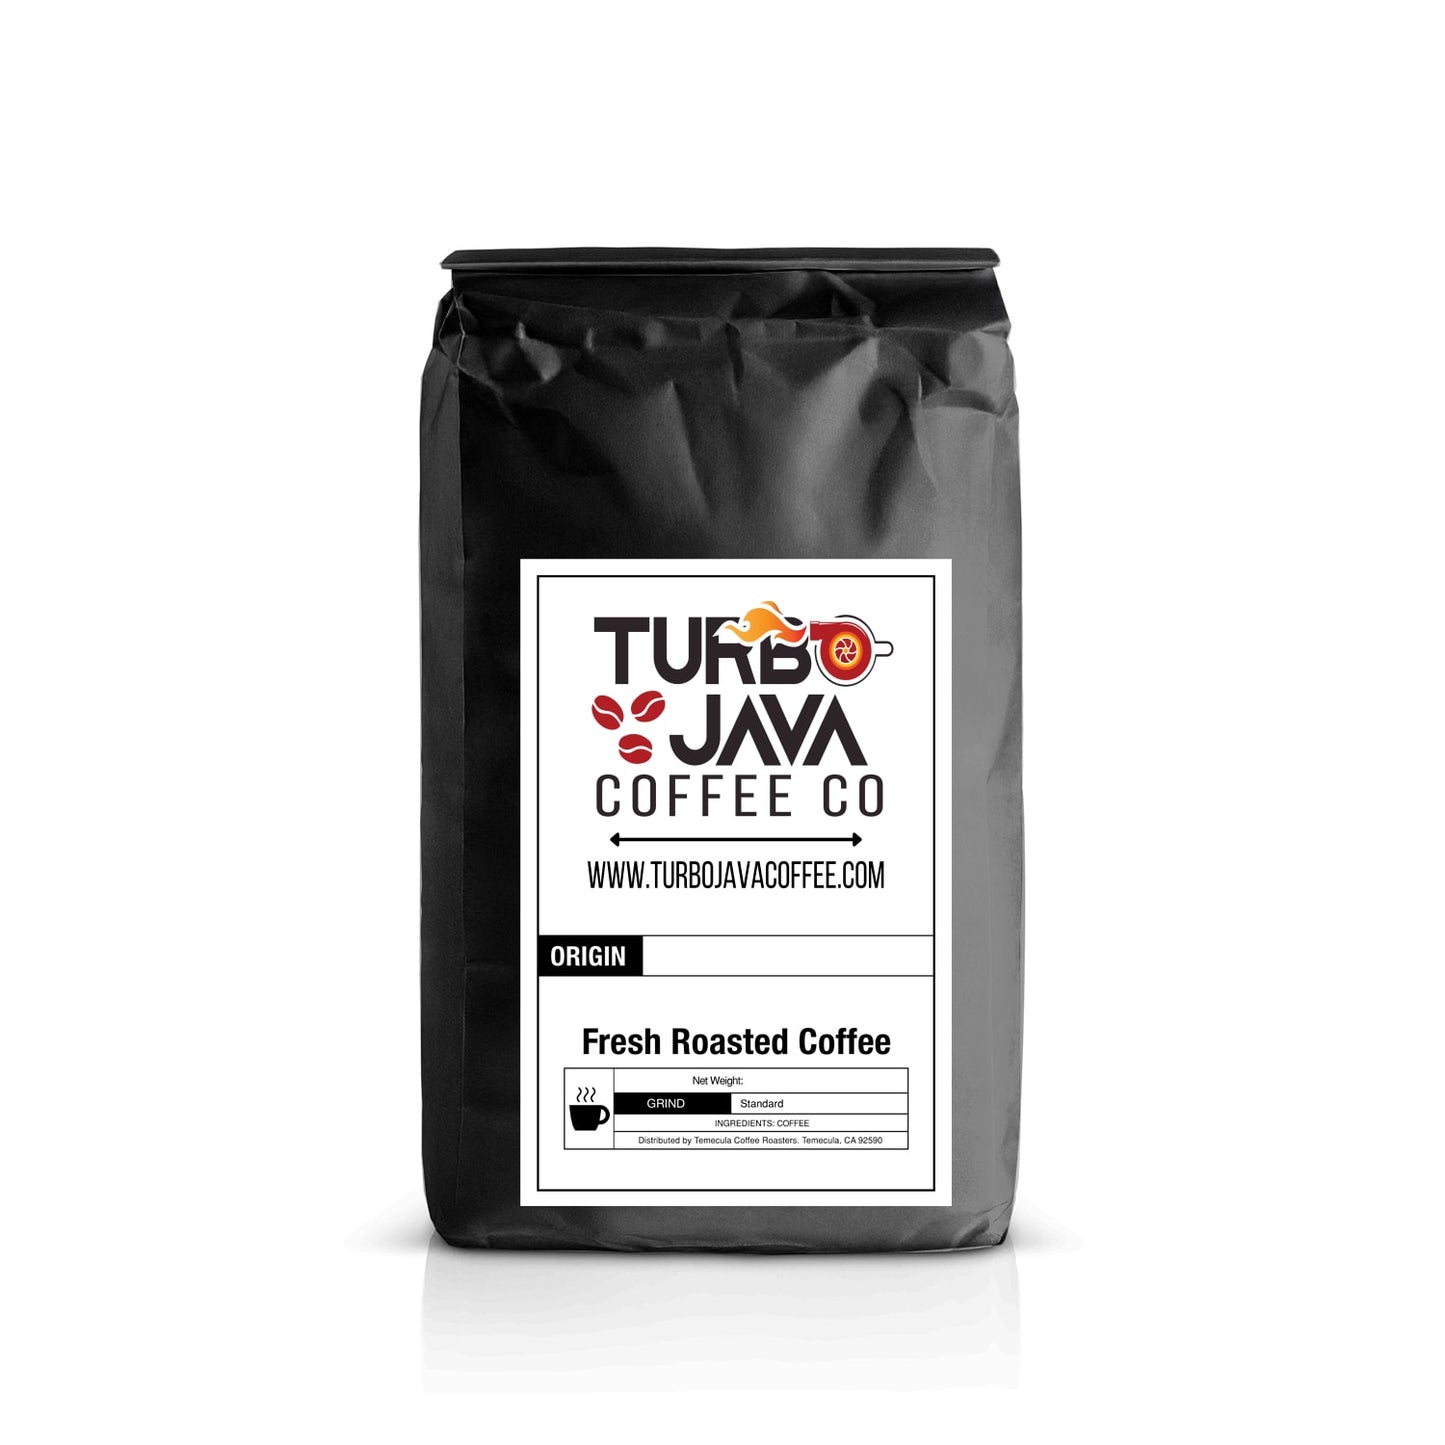 Turbo Java Coffee Co. Bali Blue Coffee 12 oz / Standard,12 oz / Coarse,12 oz / Espresso,12 oz / Whole Bean,1 lb / Standard,1 lb / Coarse,1 lb / Espresso,1 lb / Whole Bean,2 lb / Standard,2 lb / Coarse,2 lb / Espresso,2 lb / Whole Bean,5 lb / Standard,5 lb / Coarse,5 lb / Espresso,5 lb / Whole Bean,12 lb / Standard,12 lb / Coarse,12 lb / Espresso,12 lb / Whole Bean